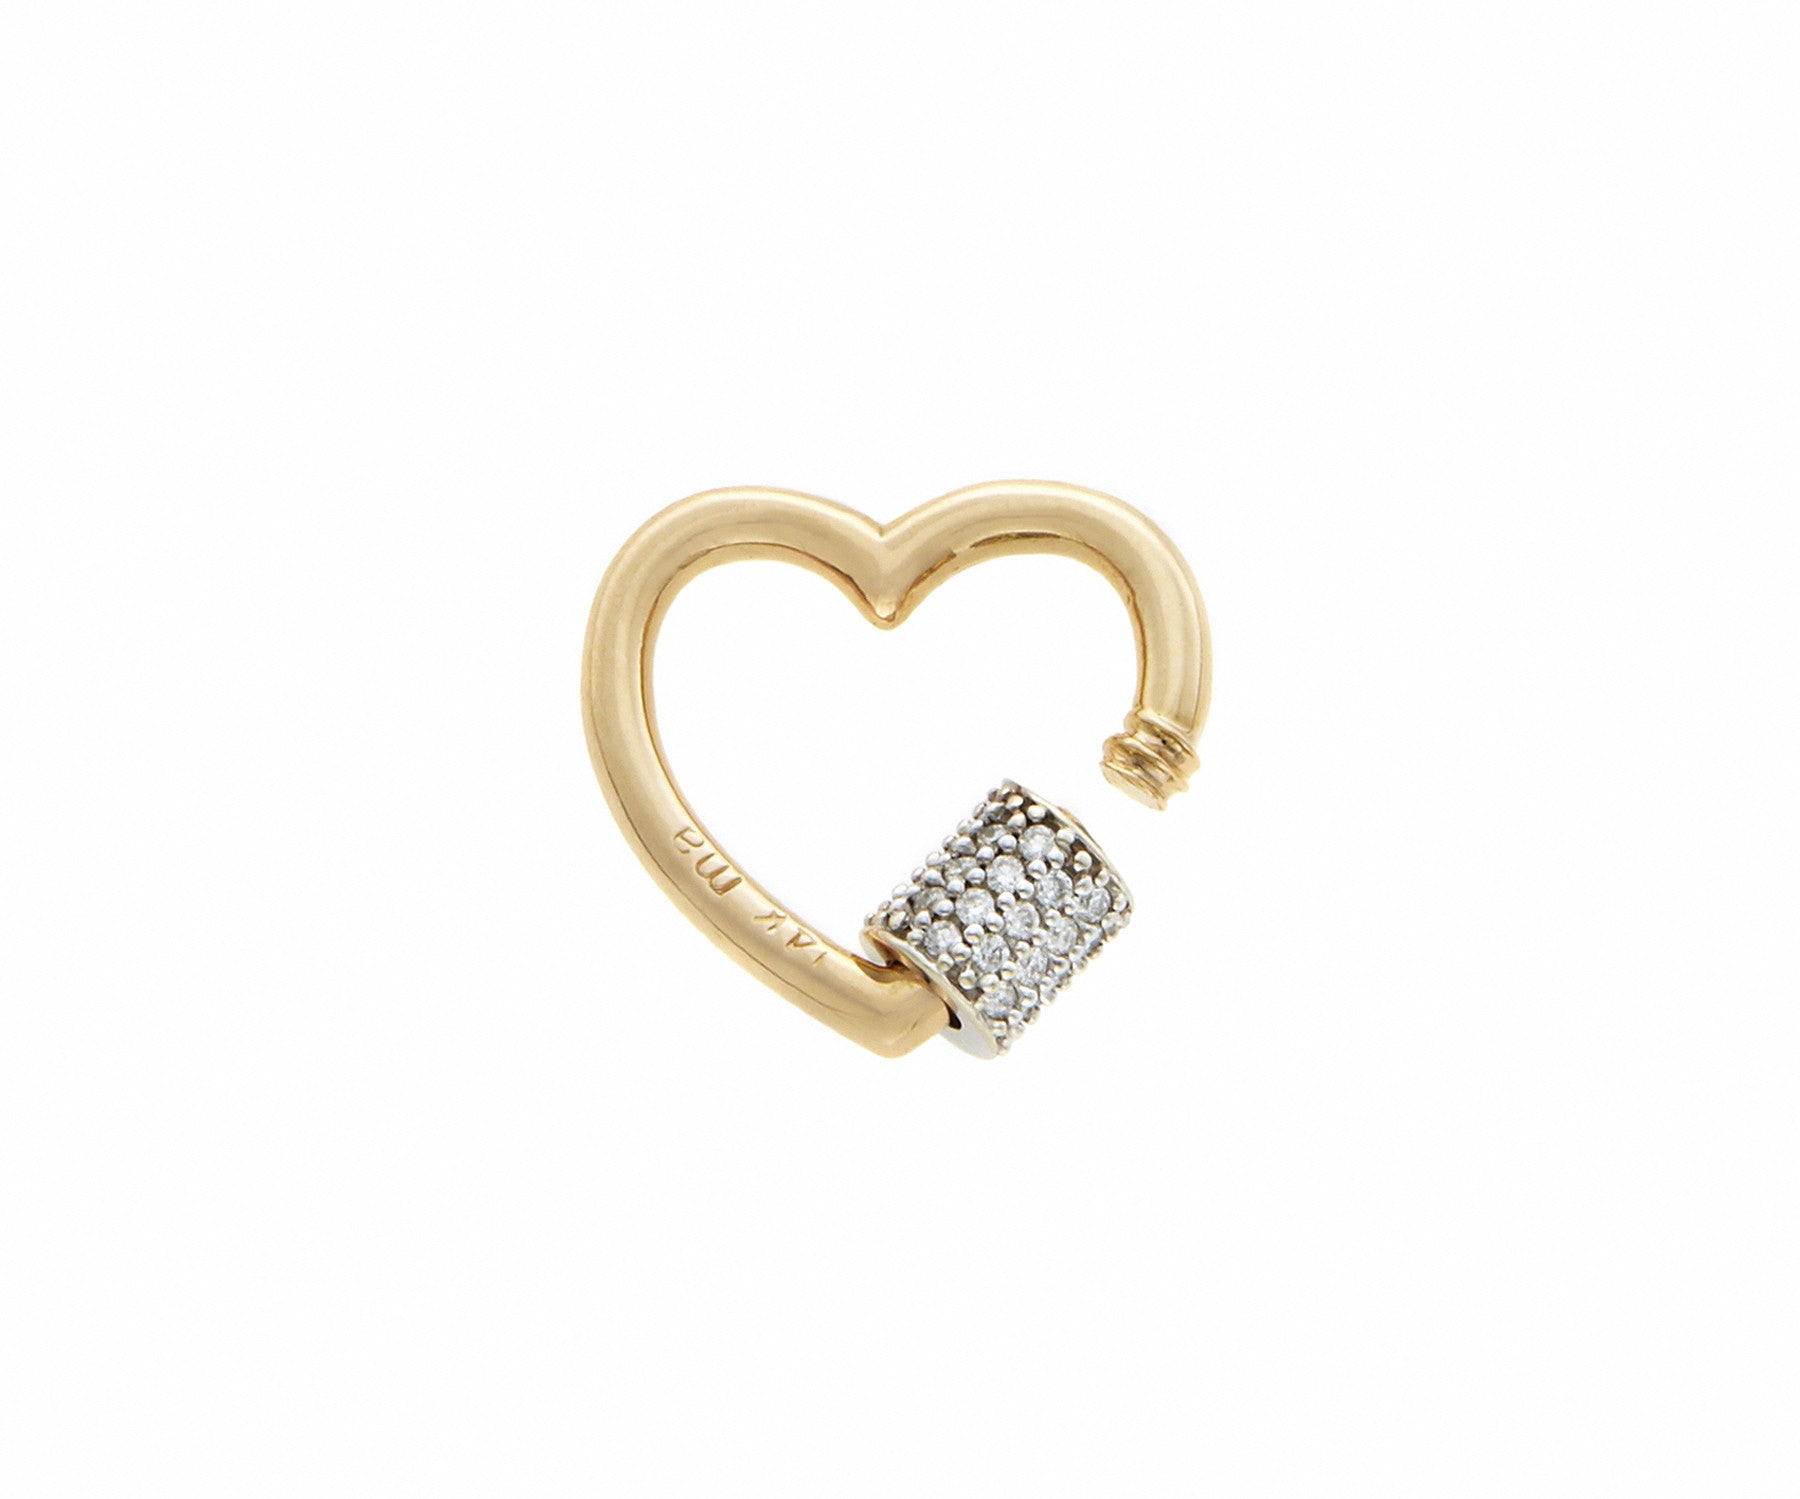 LOCKIT BAG PADLOCK, WHITE GOLD AND DIAMONDS - Jewelry - Categories